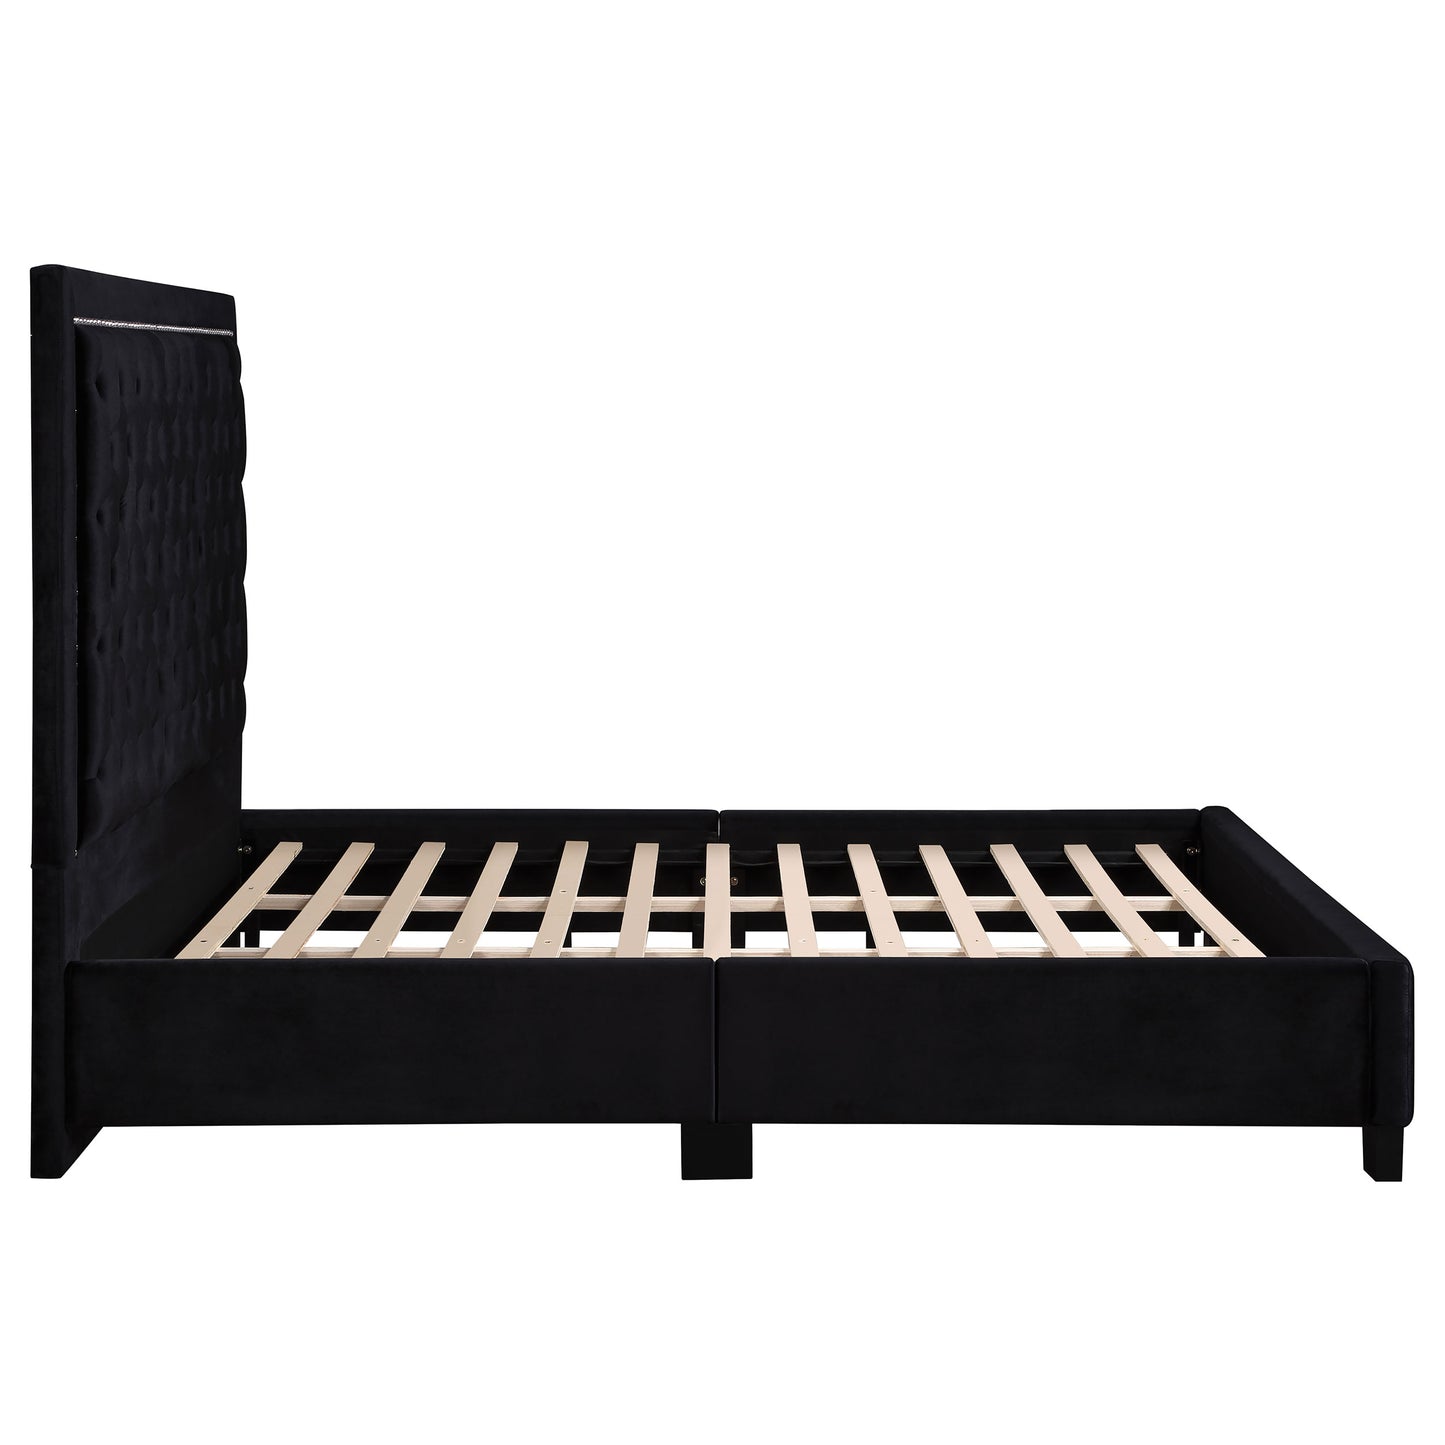 Hailey Upholstered Eastern King Panel Bed Black